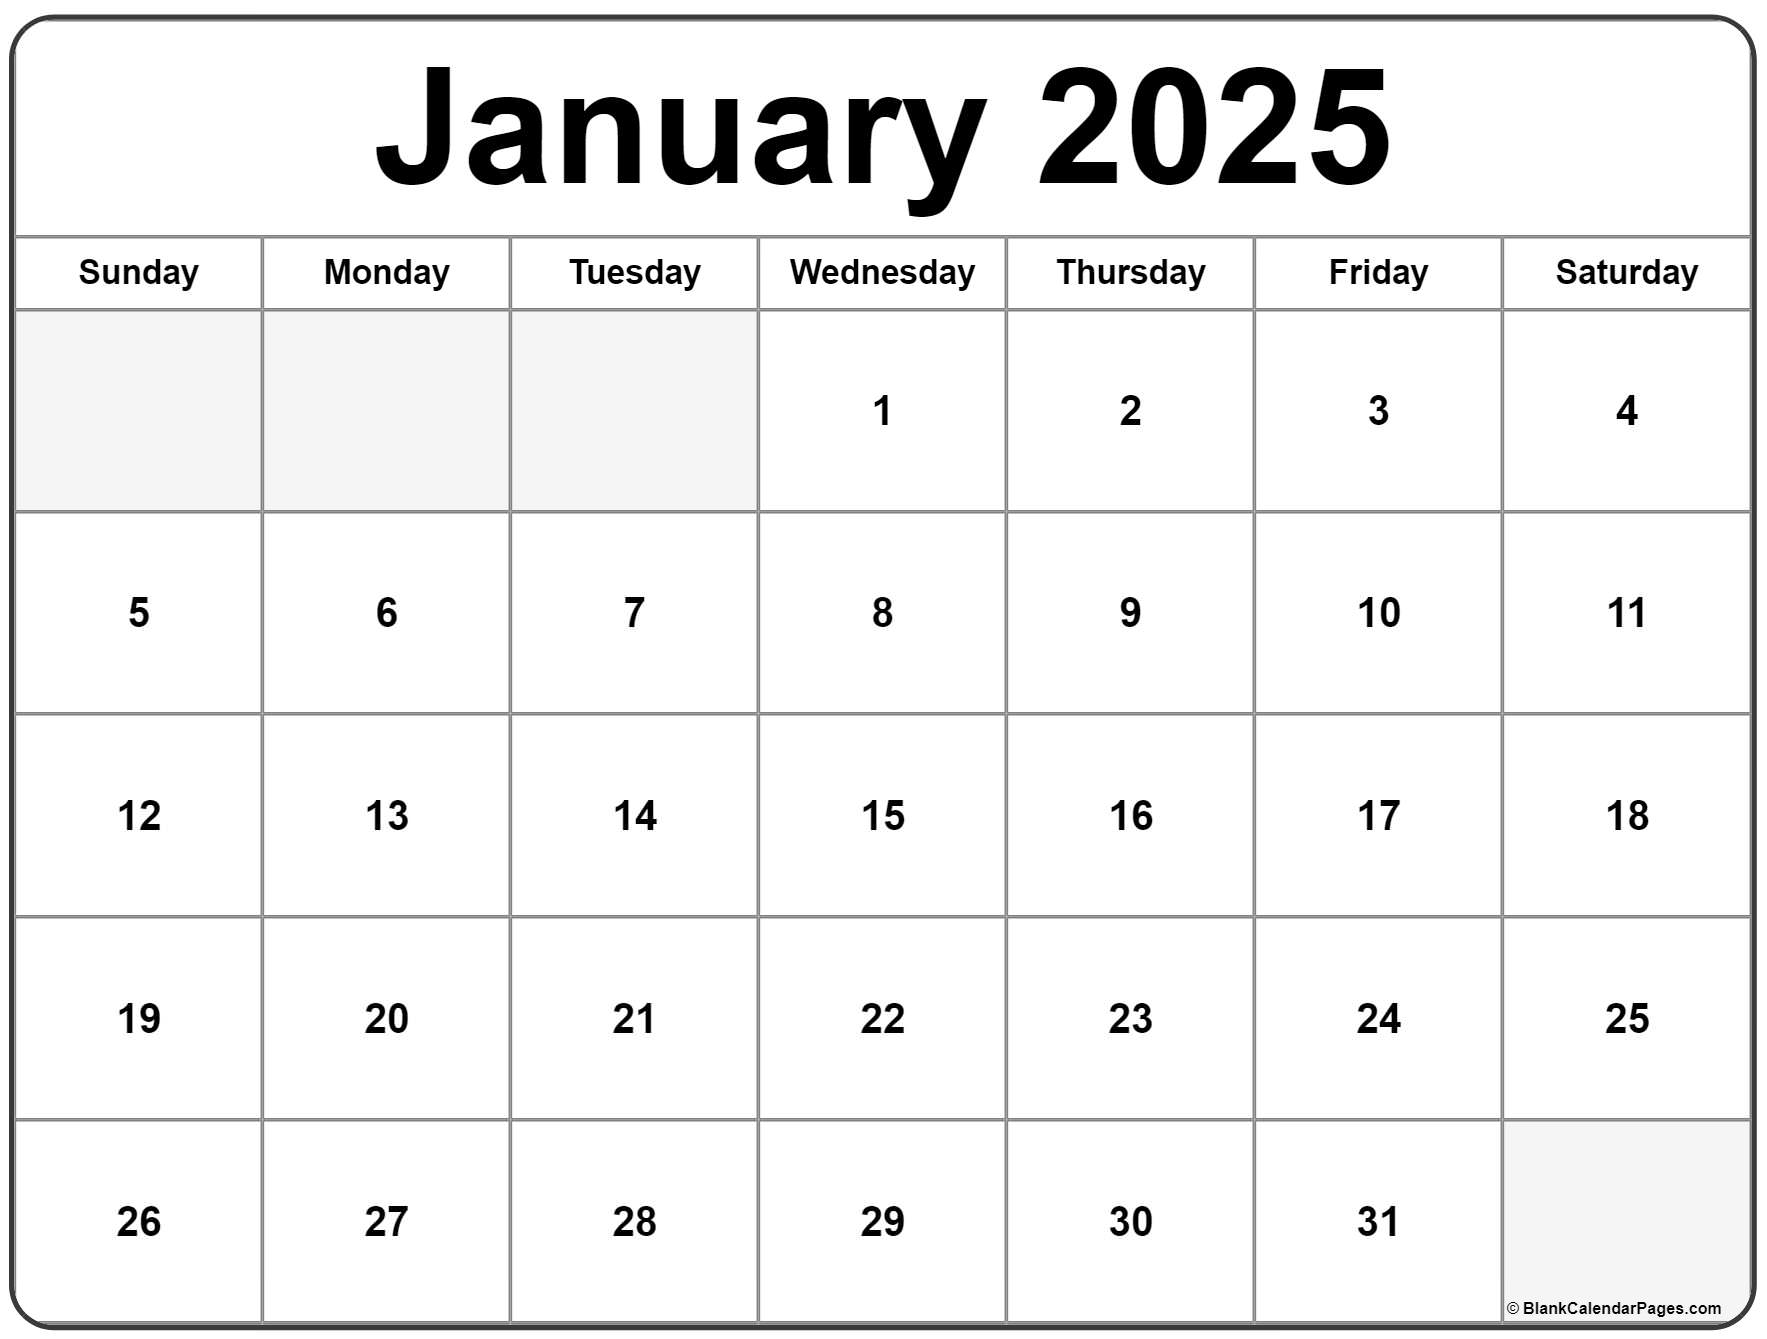 January 2025 calendar free printable calendar